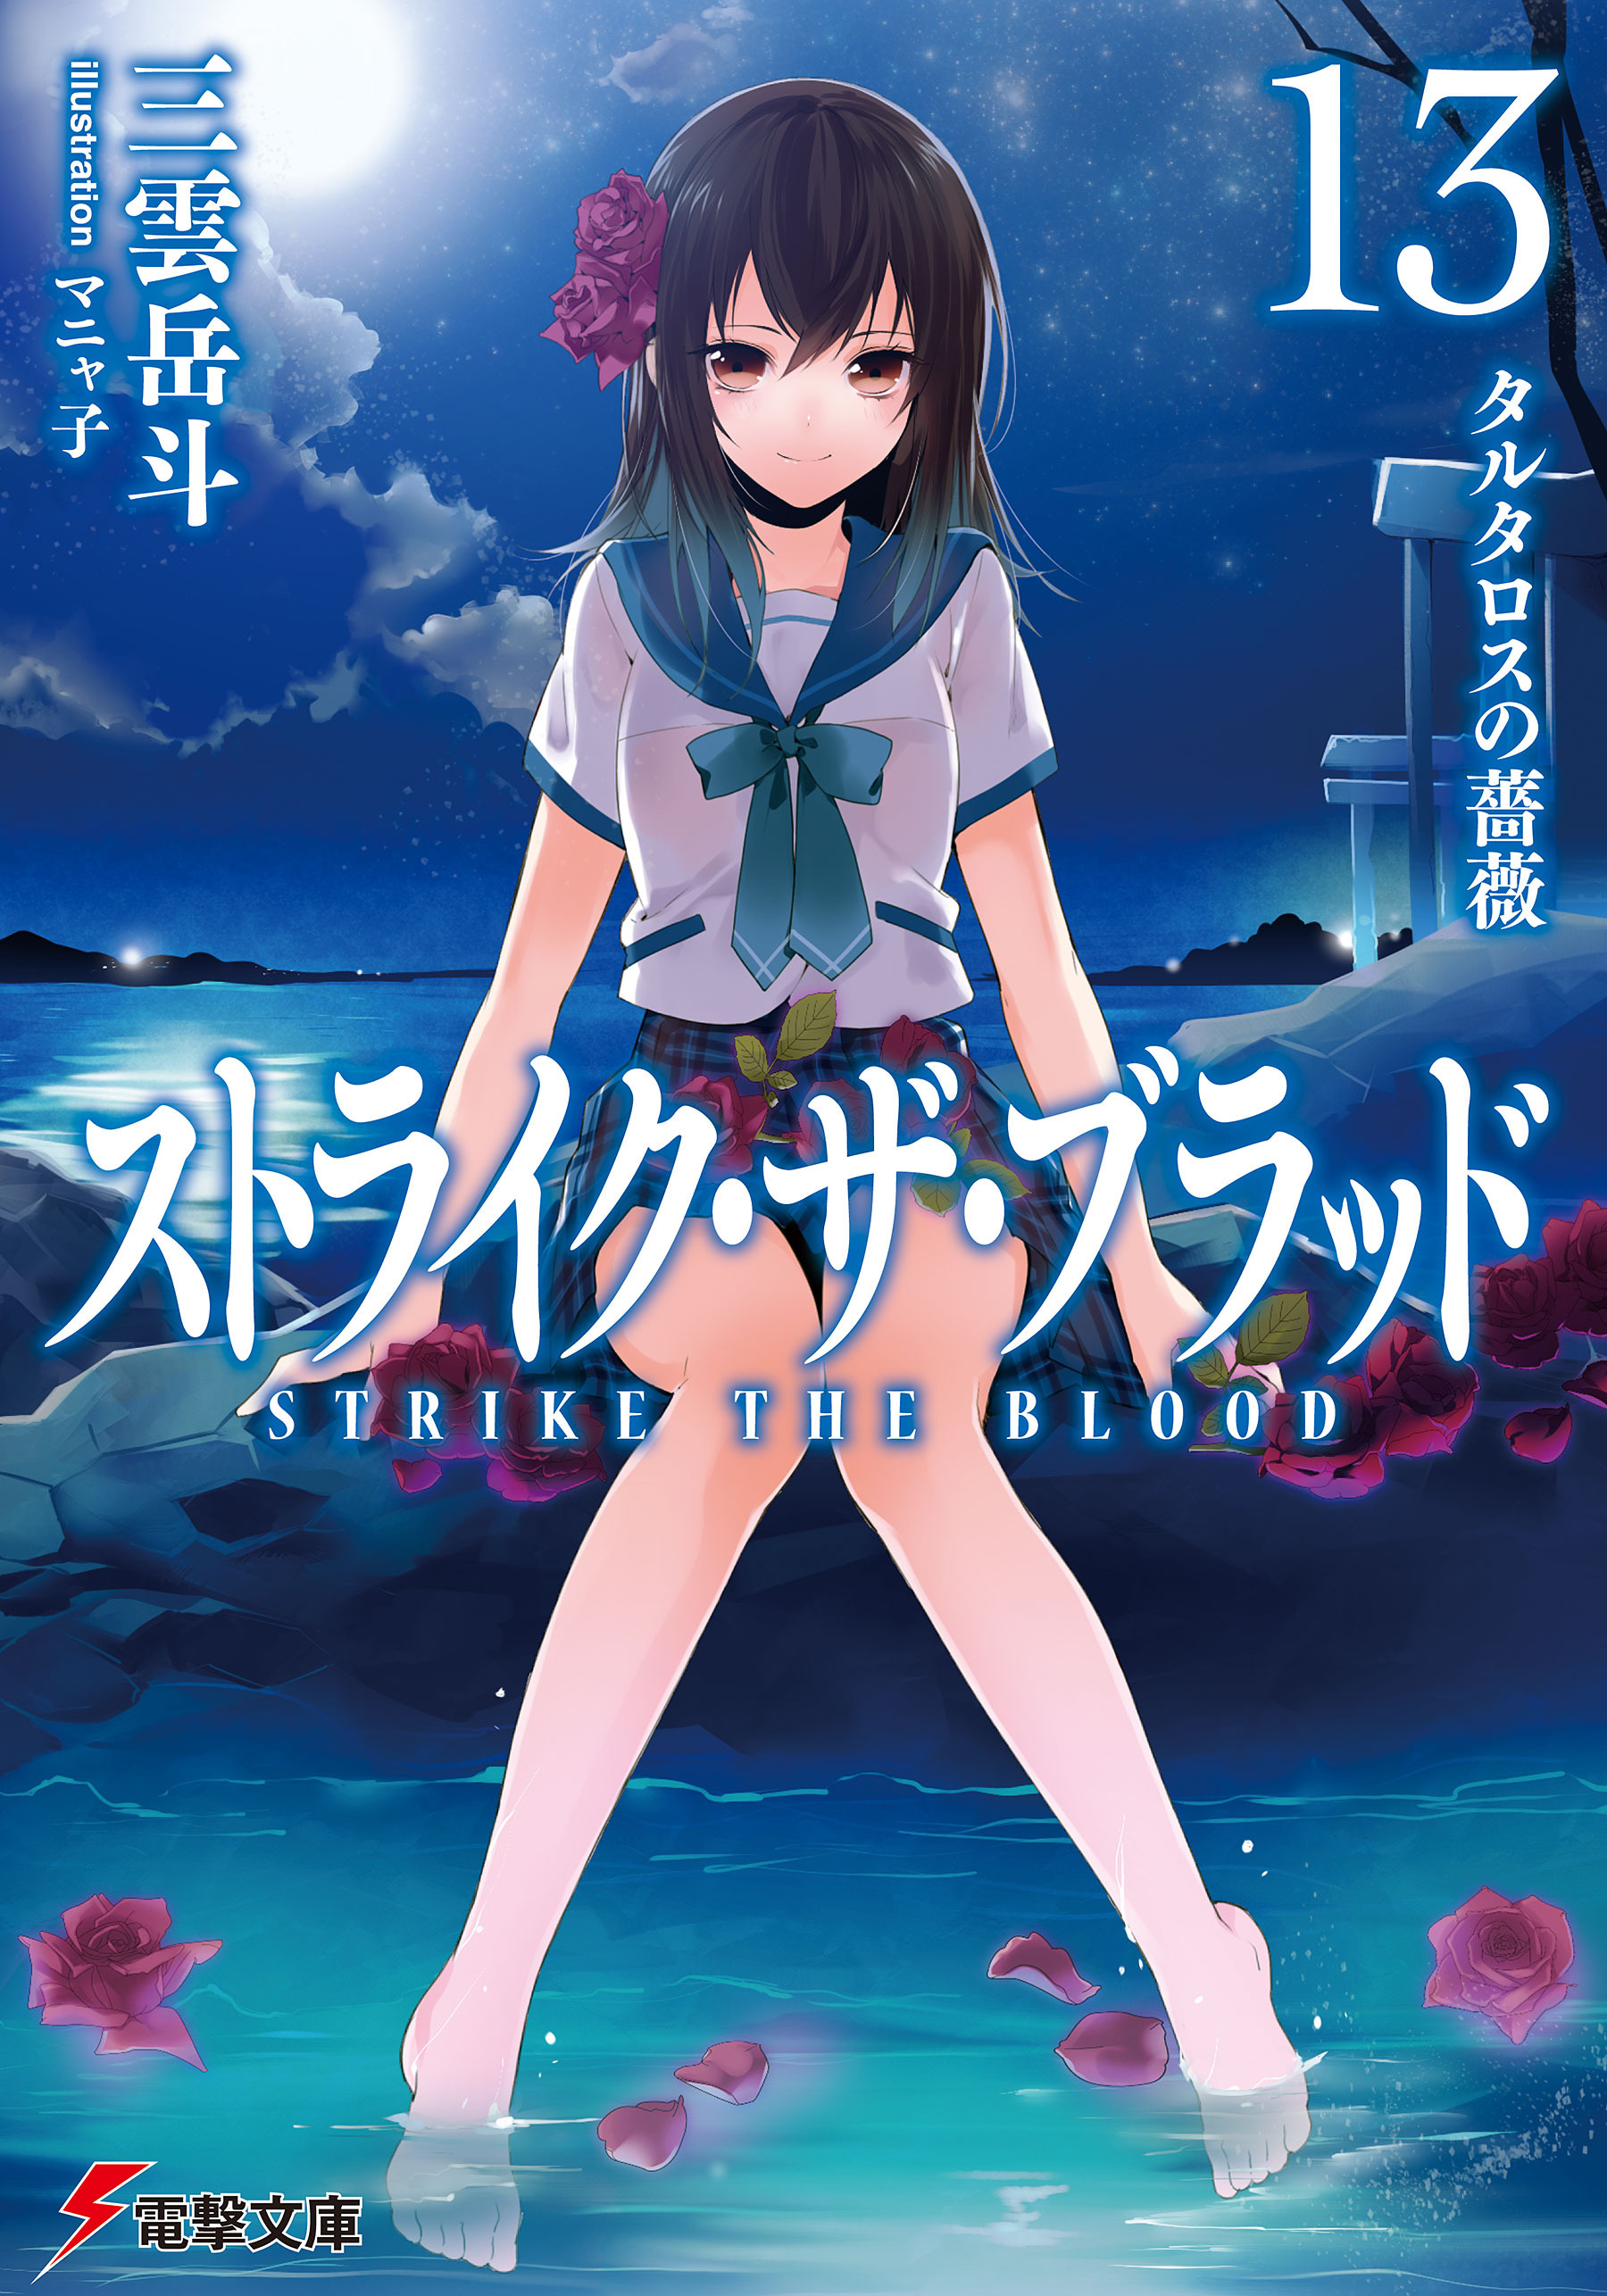 Light Novel Volume 17, Strike The Blood Wiki, Fandom